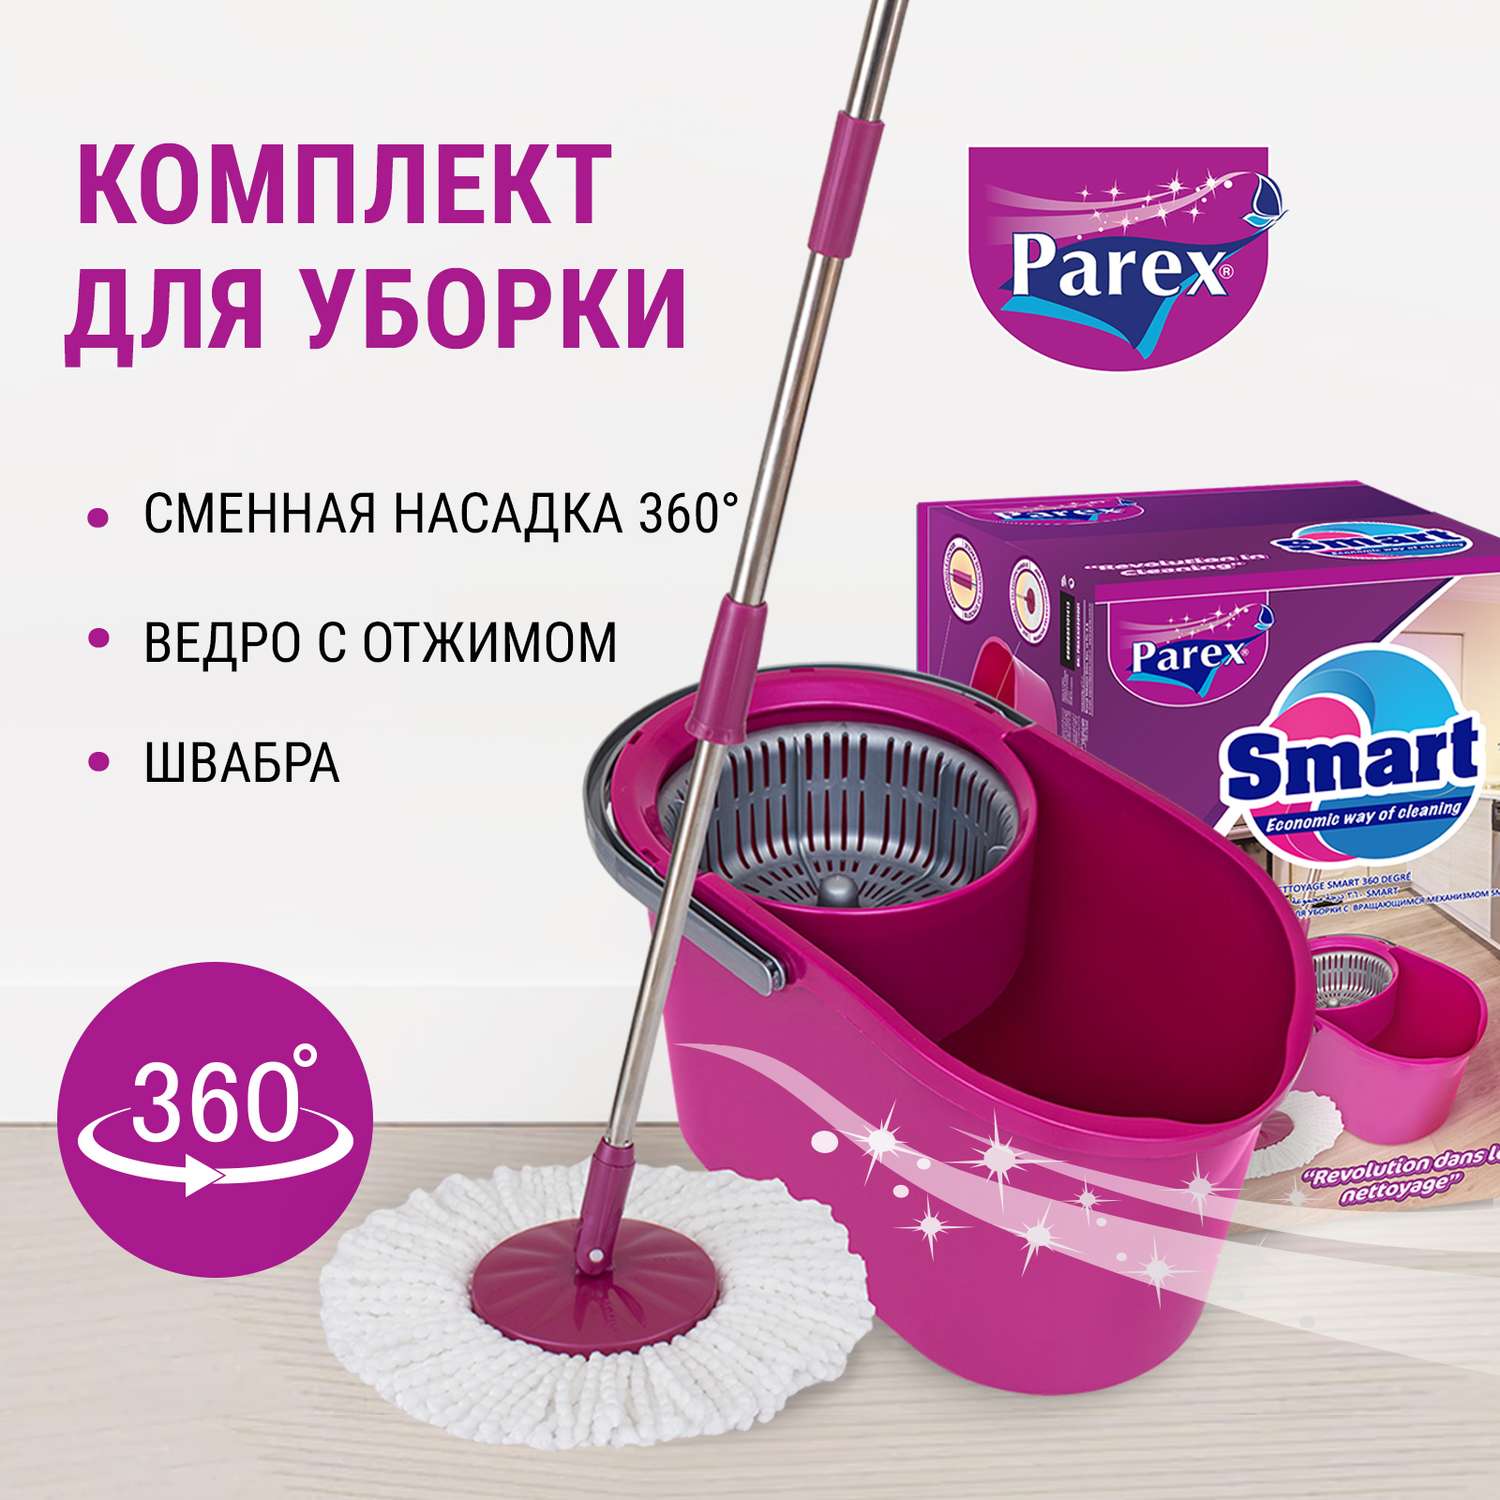 Комплект для уборки Parex с автоотжимом Smart 360° 1 шт - фото 6